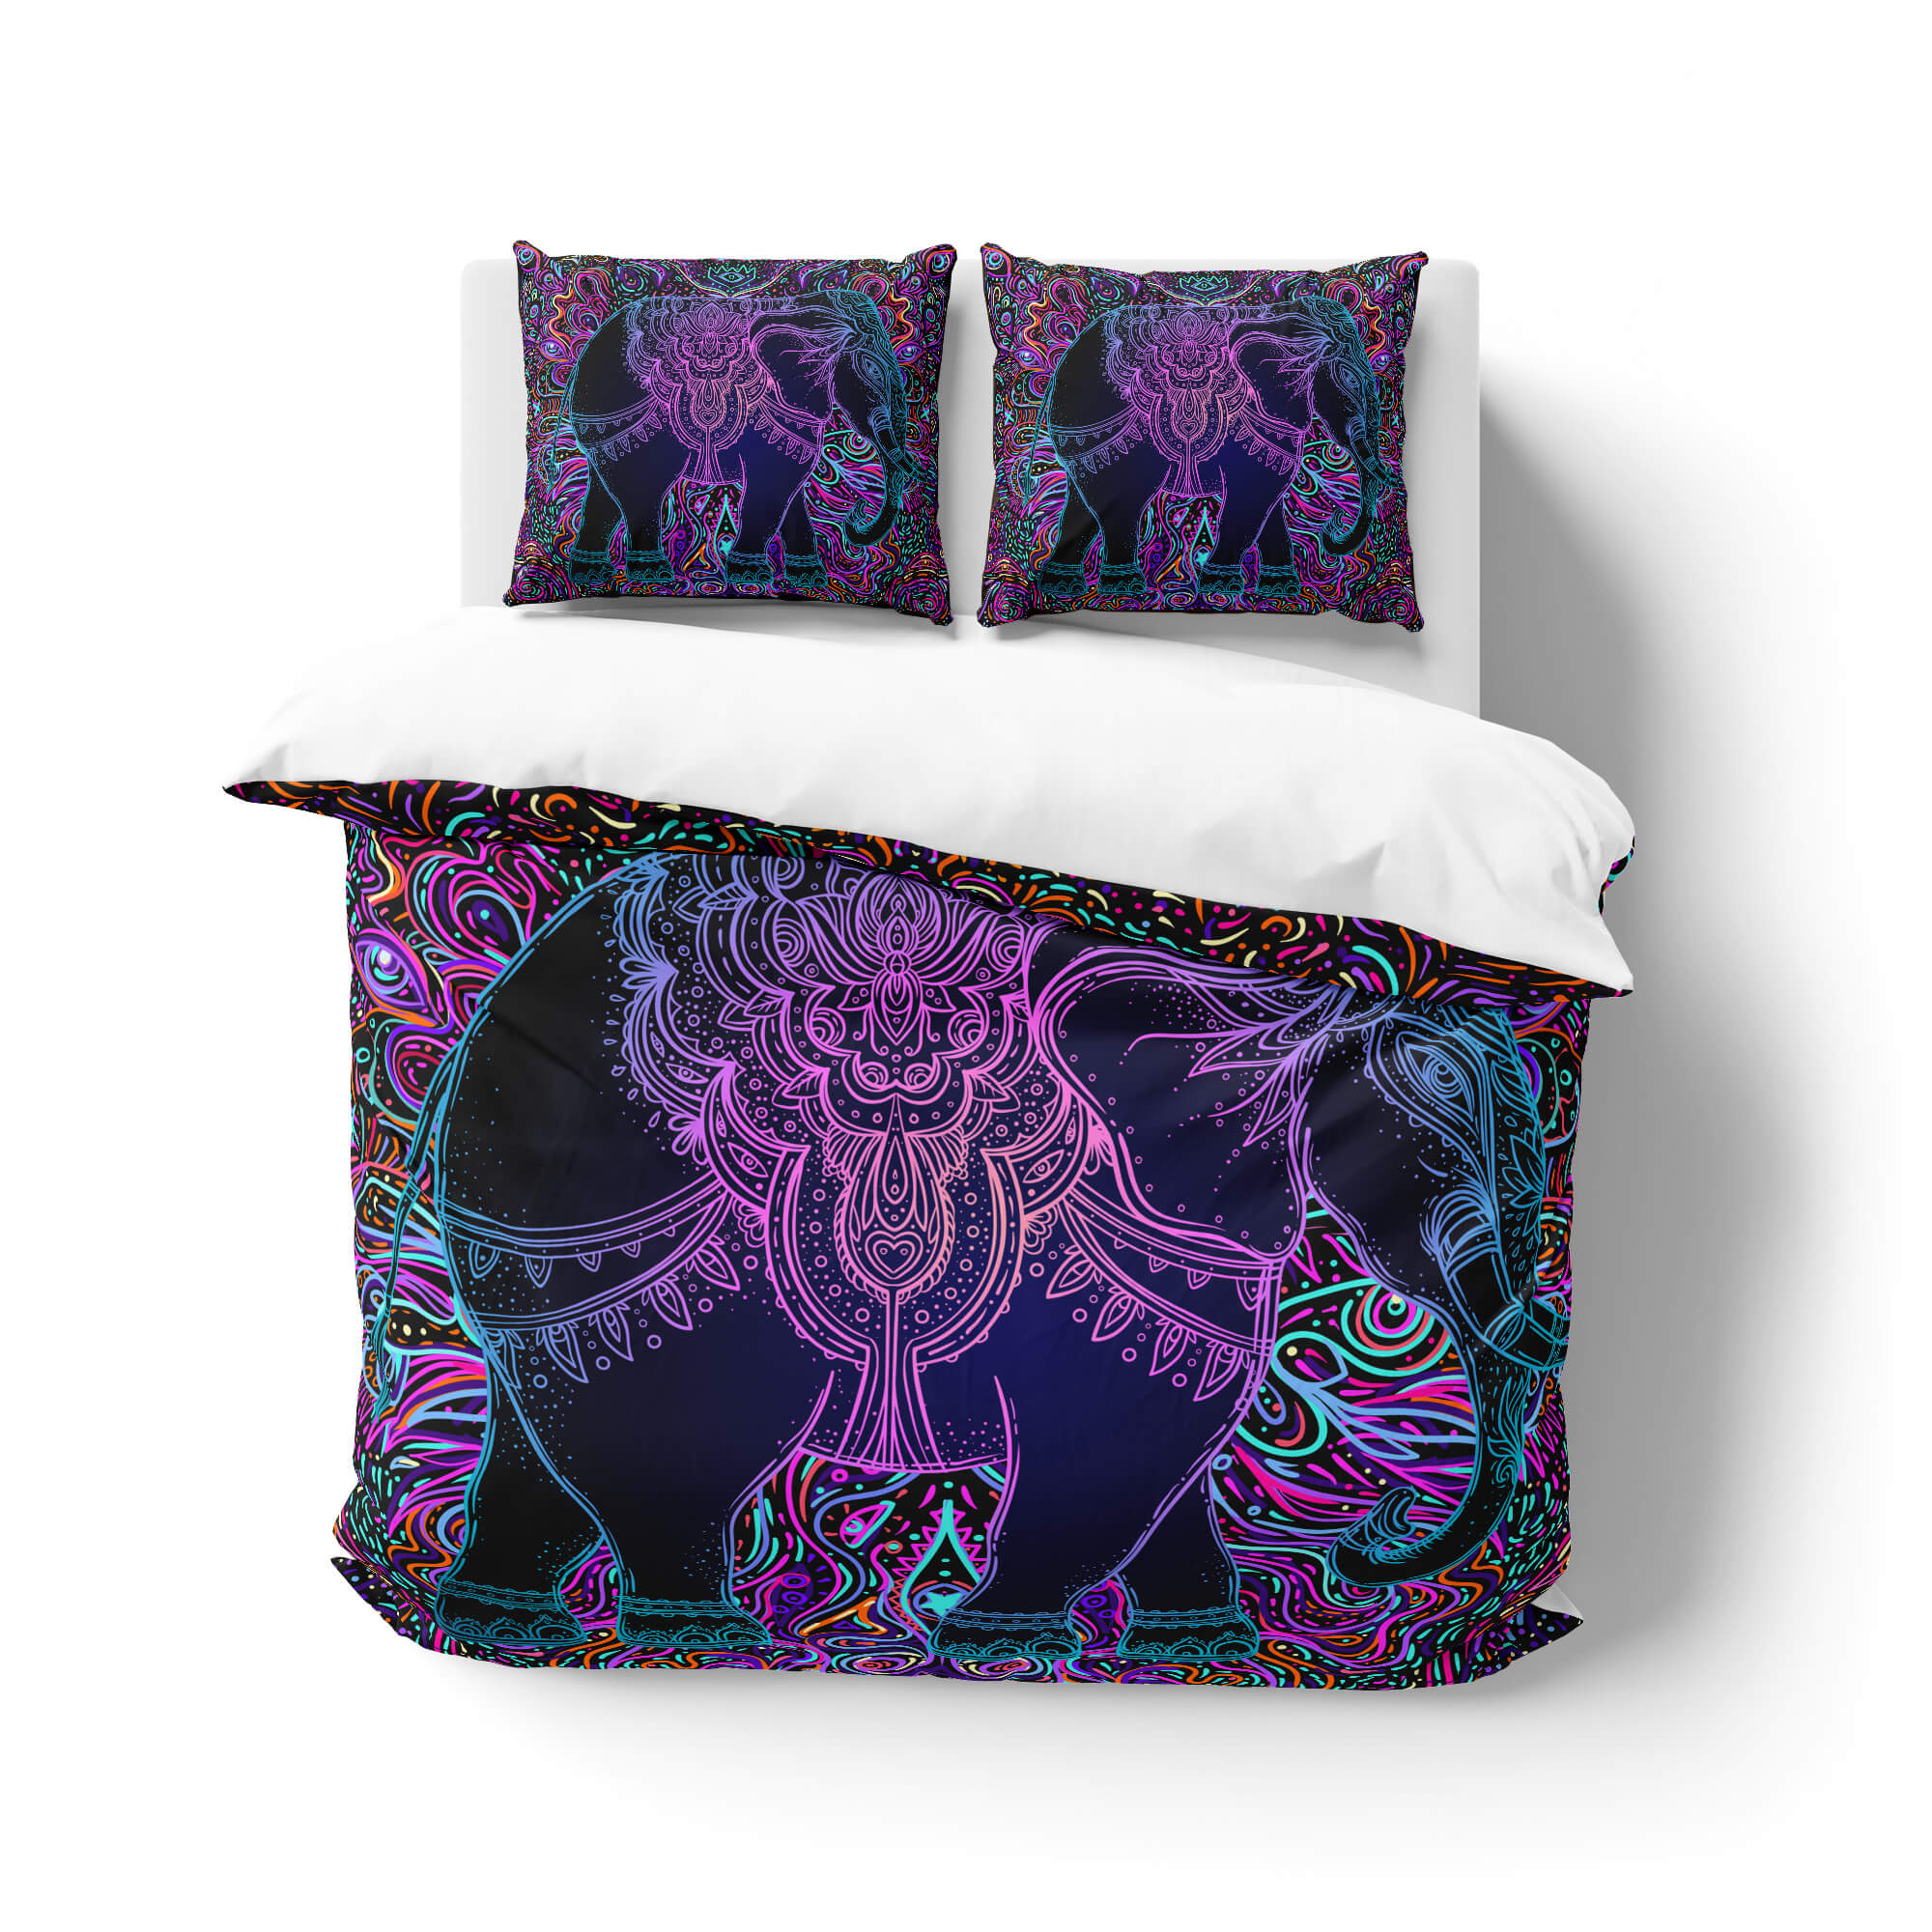 enlightened-elephant-bedding-set